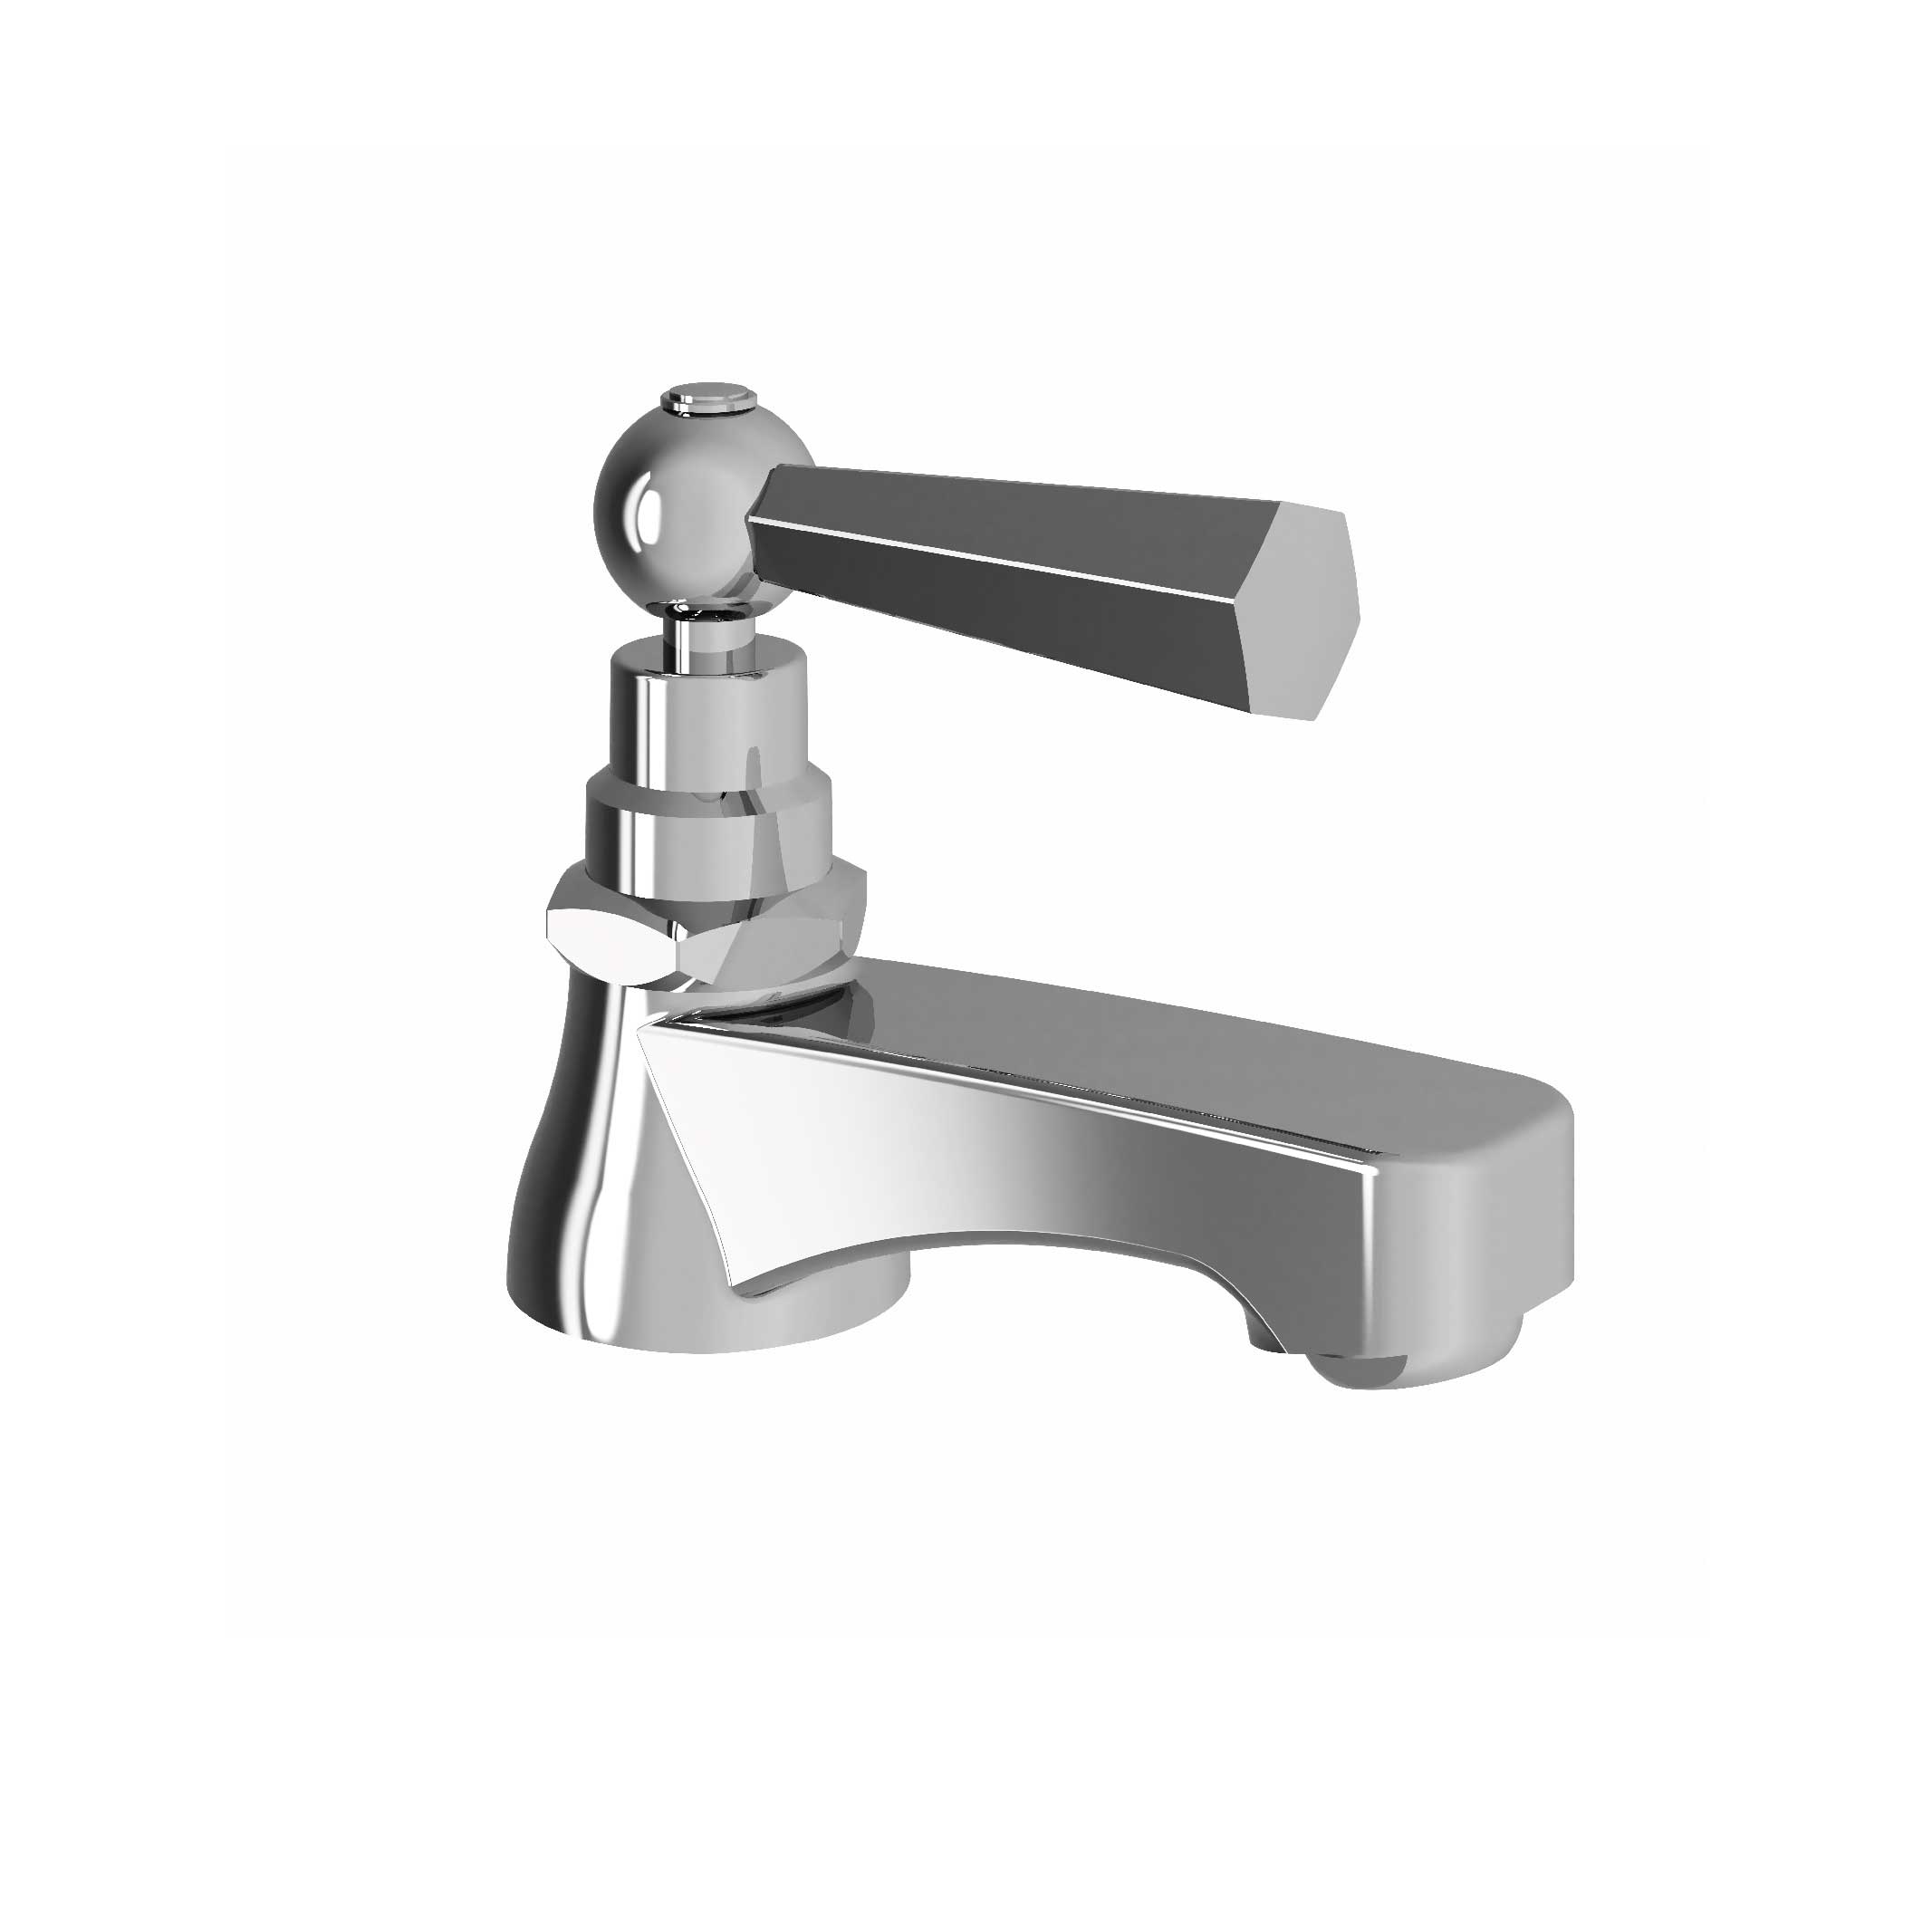 M39-4S1 Rim mounted wash-hand basin tap